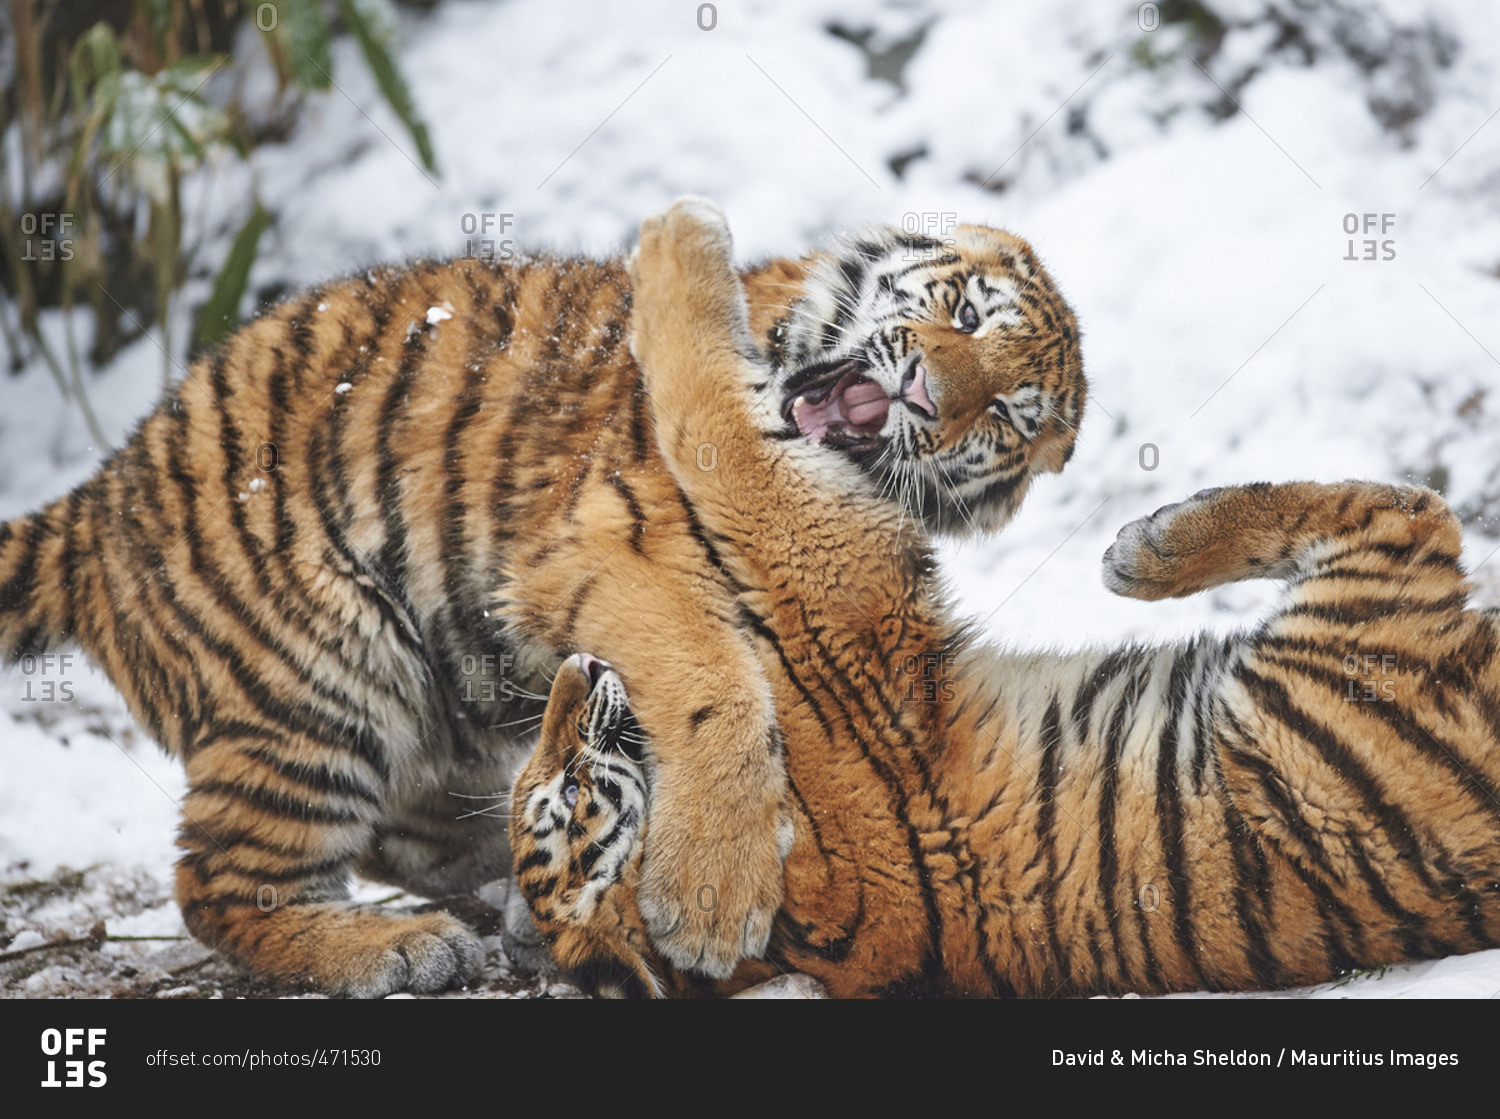 Siberian tigers, Panthera Tigris altaica, wrestling